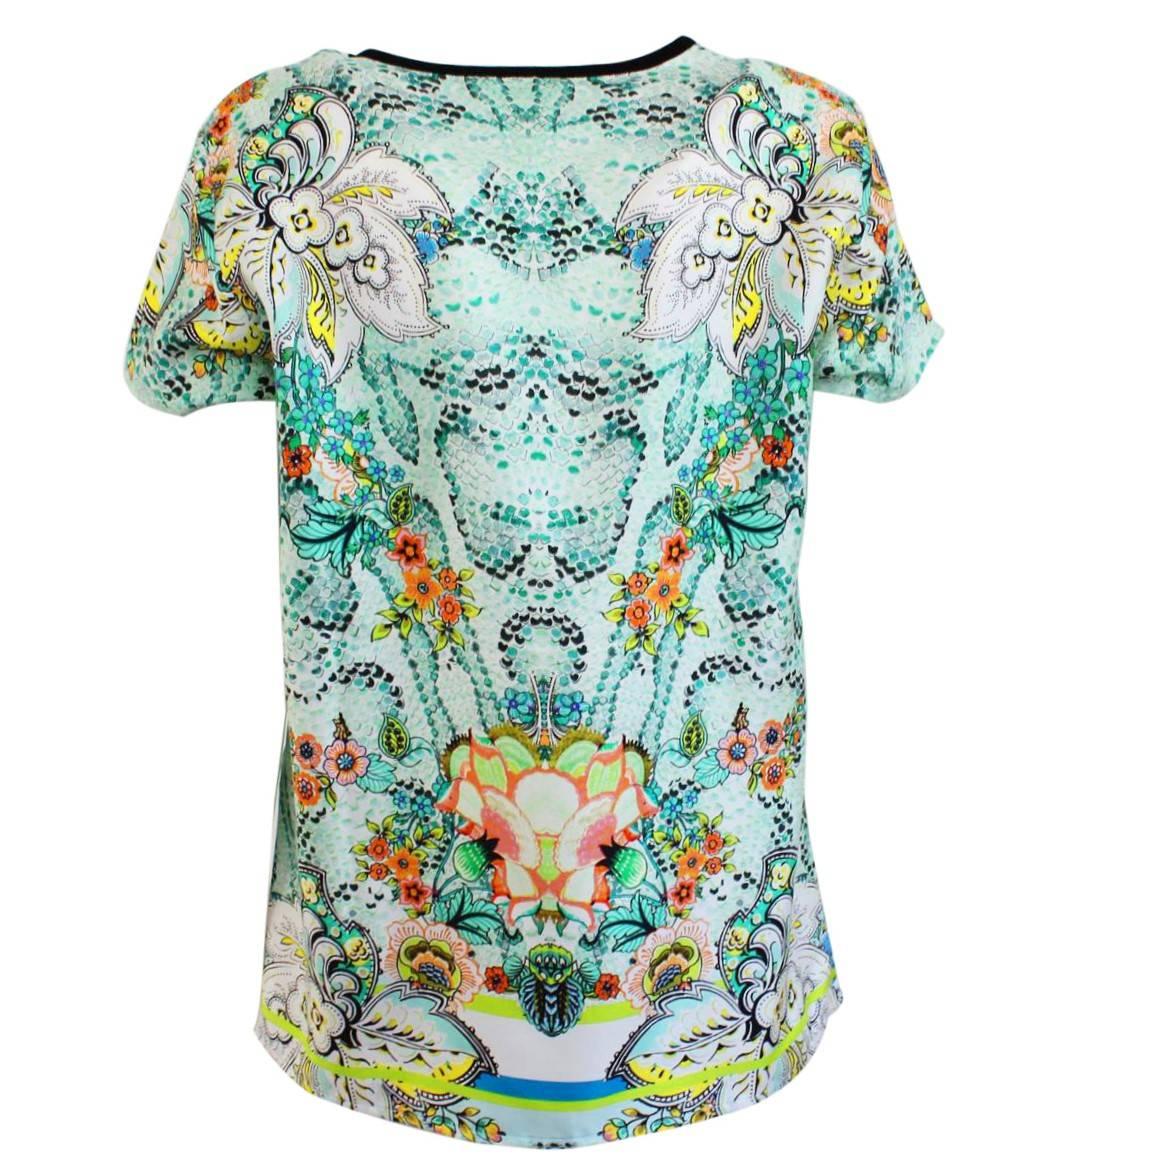 Fantastic T-Shirt by Roberto Cavalli
Wonderful print 
Silk
Aqua green color base
Multicolored pattern 